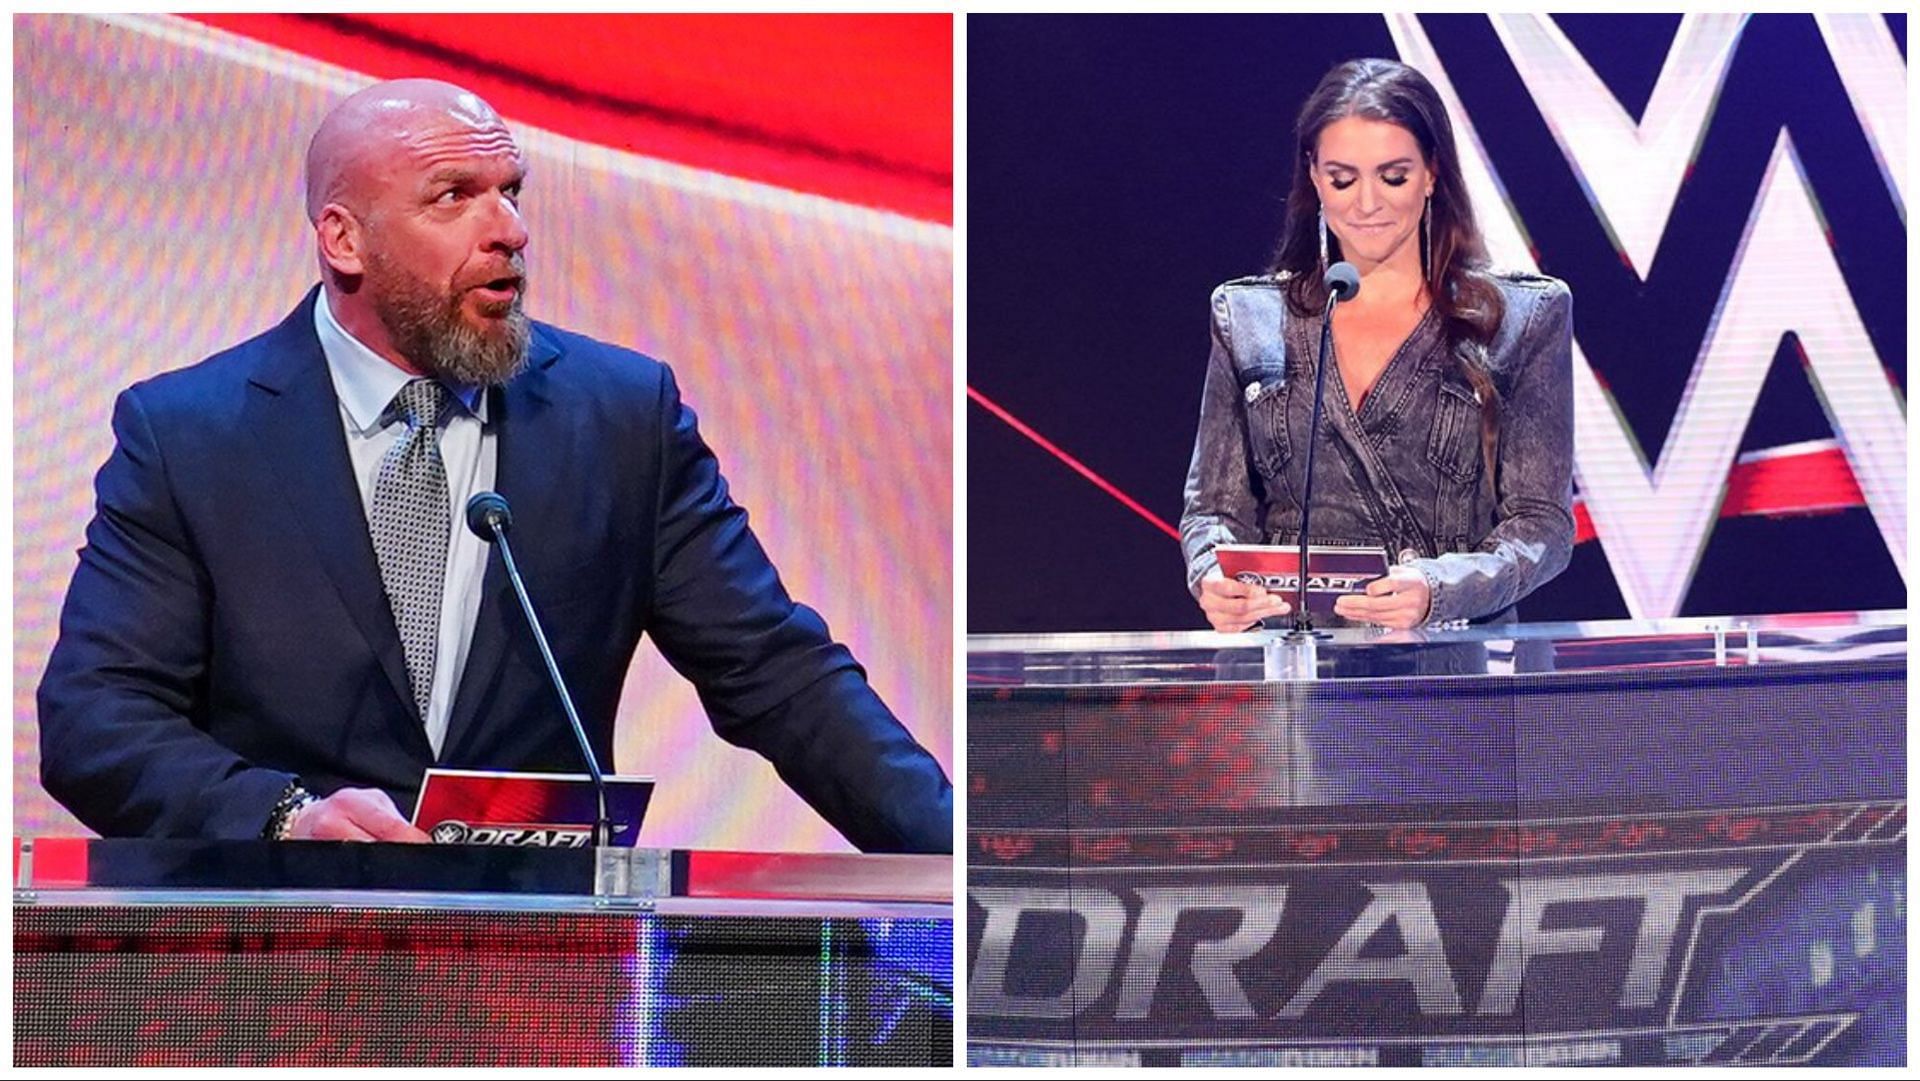 Triple H hosts the 2023 WWE Draft, Stephanie McMahon hosts the 2020 Draft